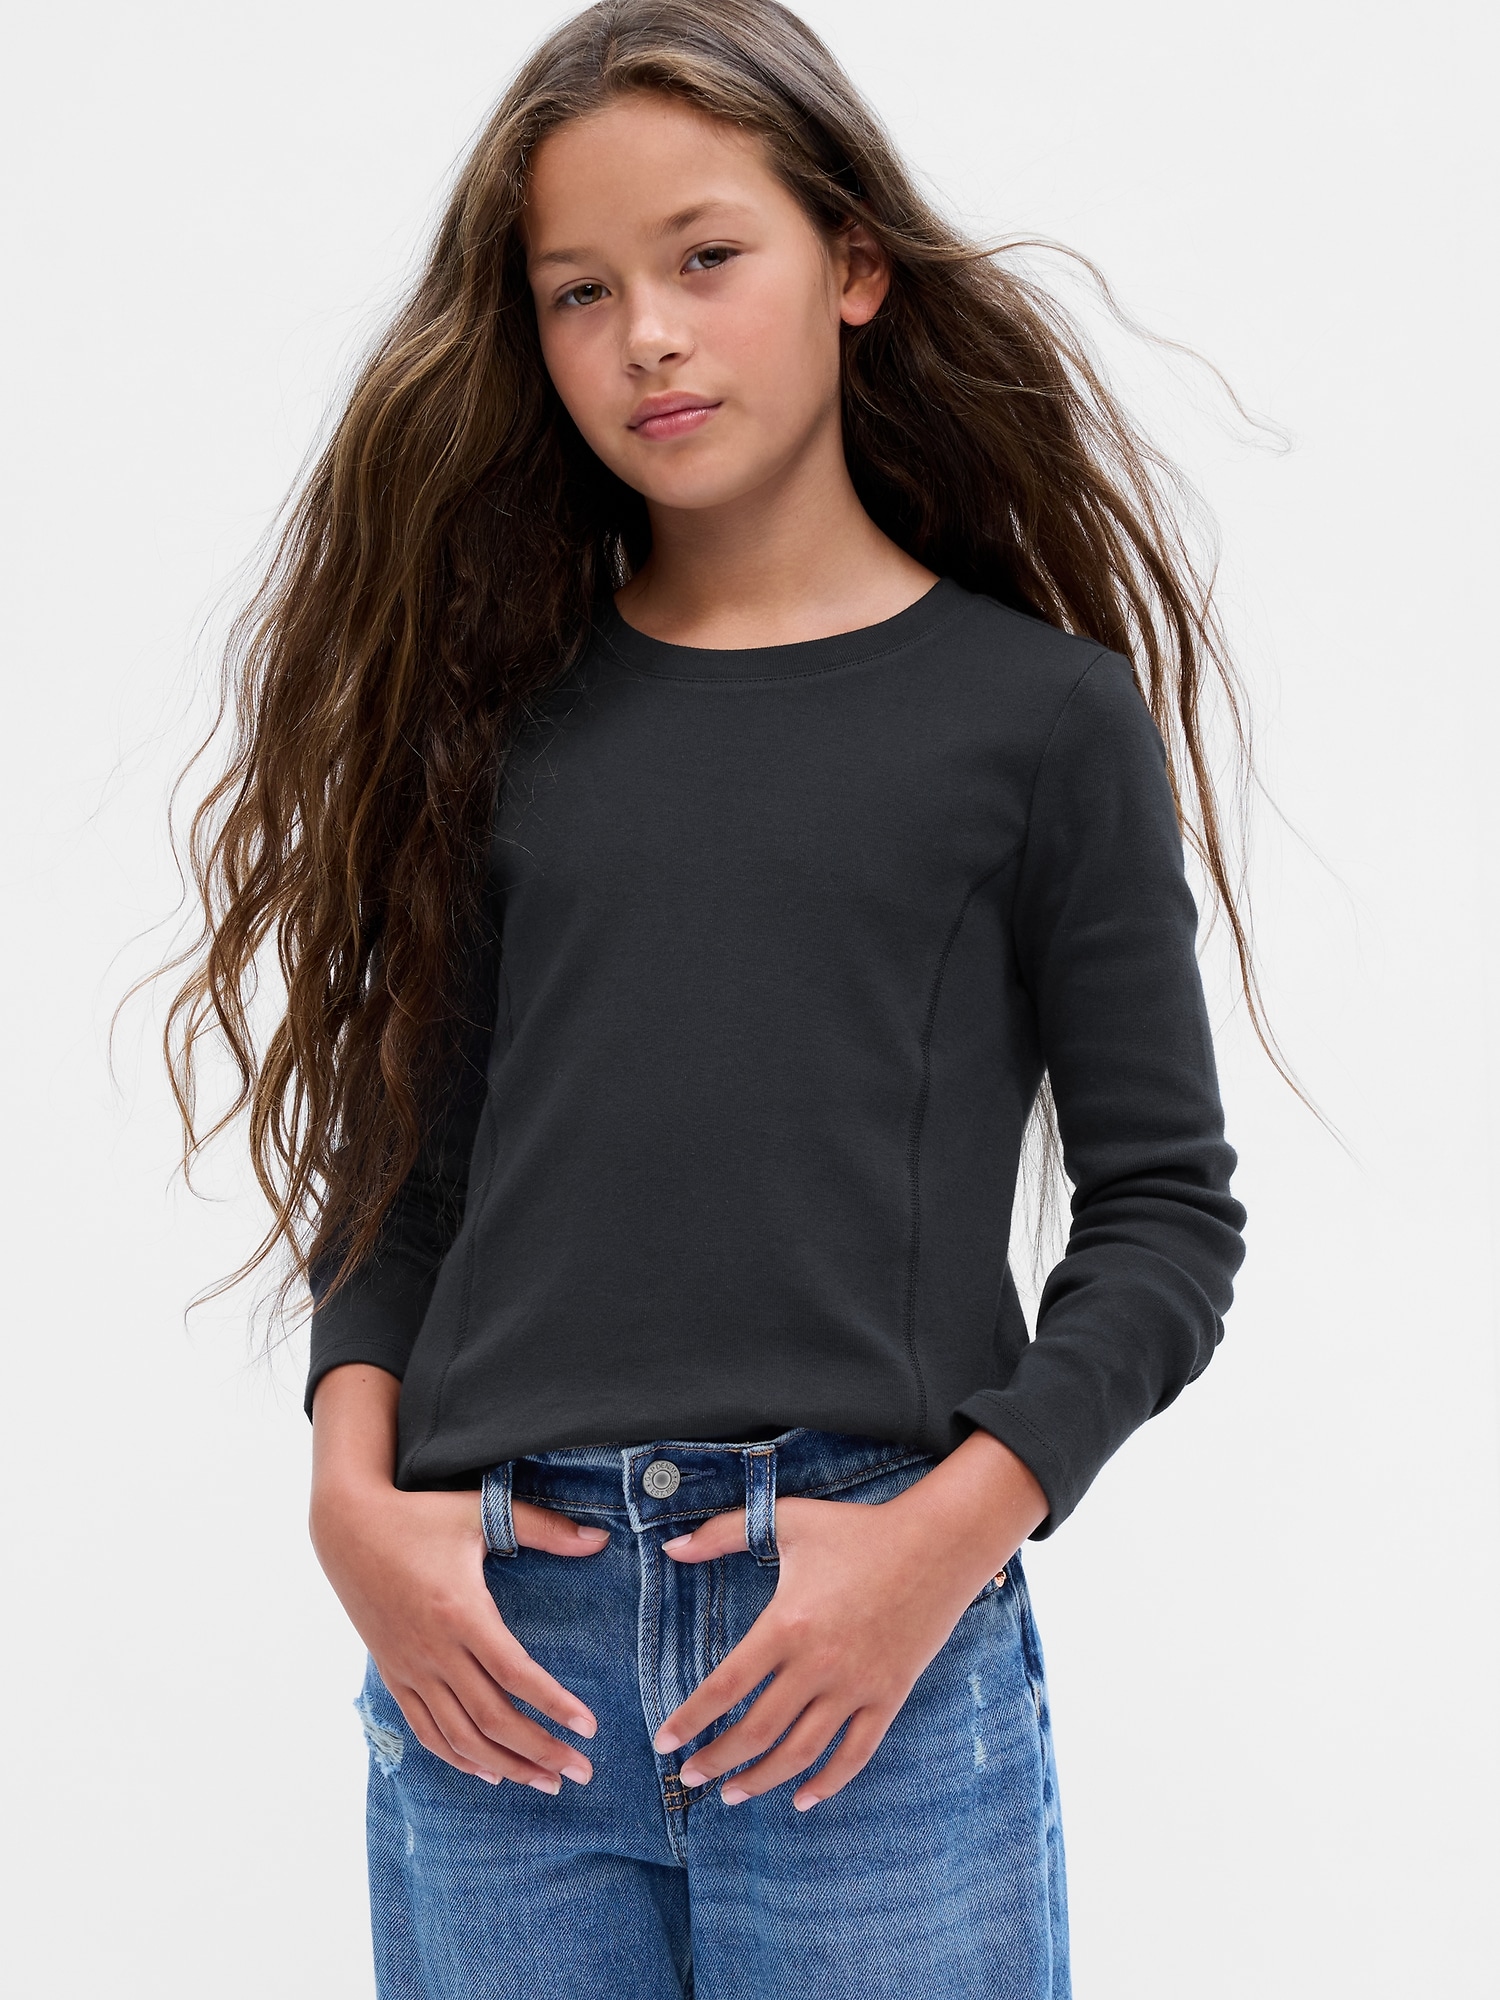 Kids Softspun T-Shirt | Gap